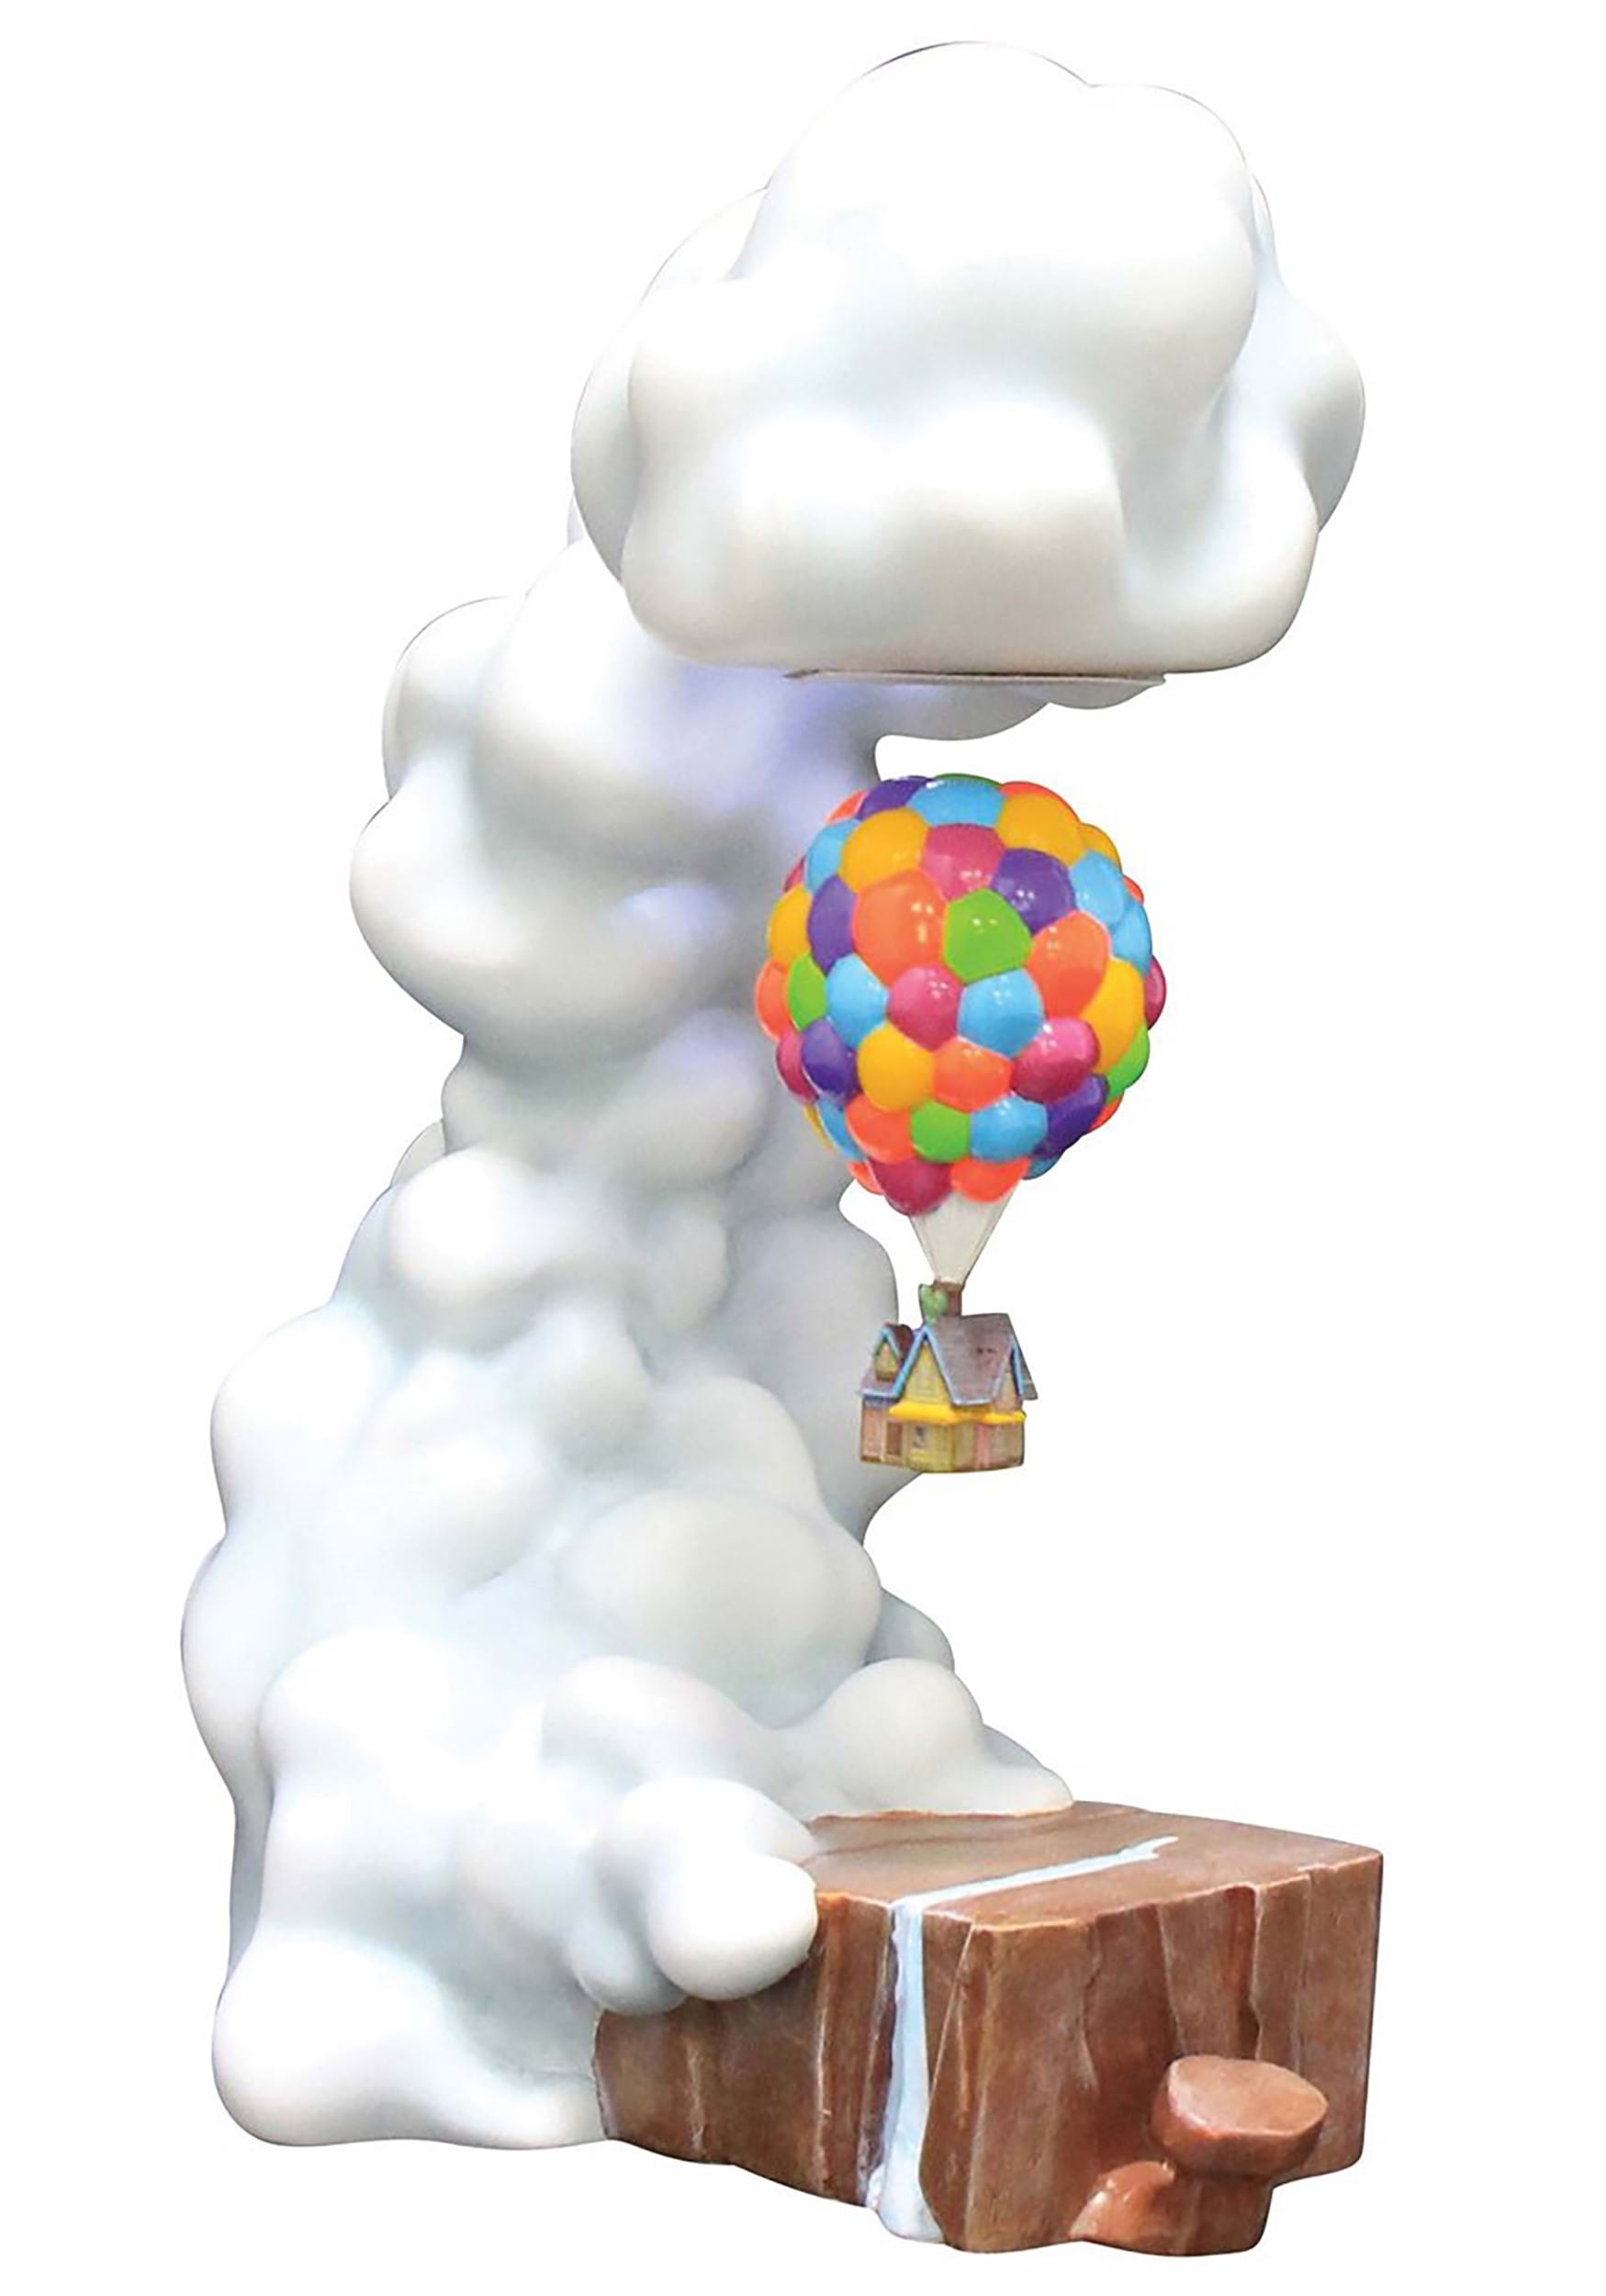 Levitating Pixar Up House Statue